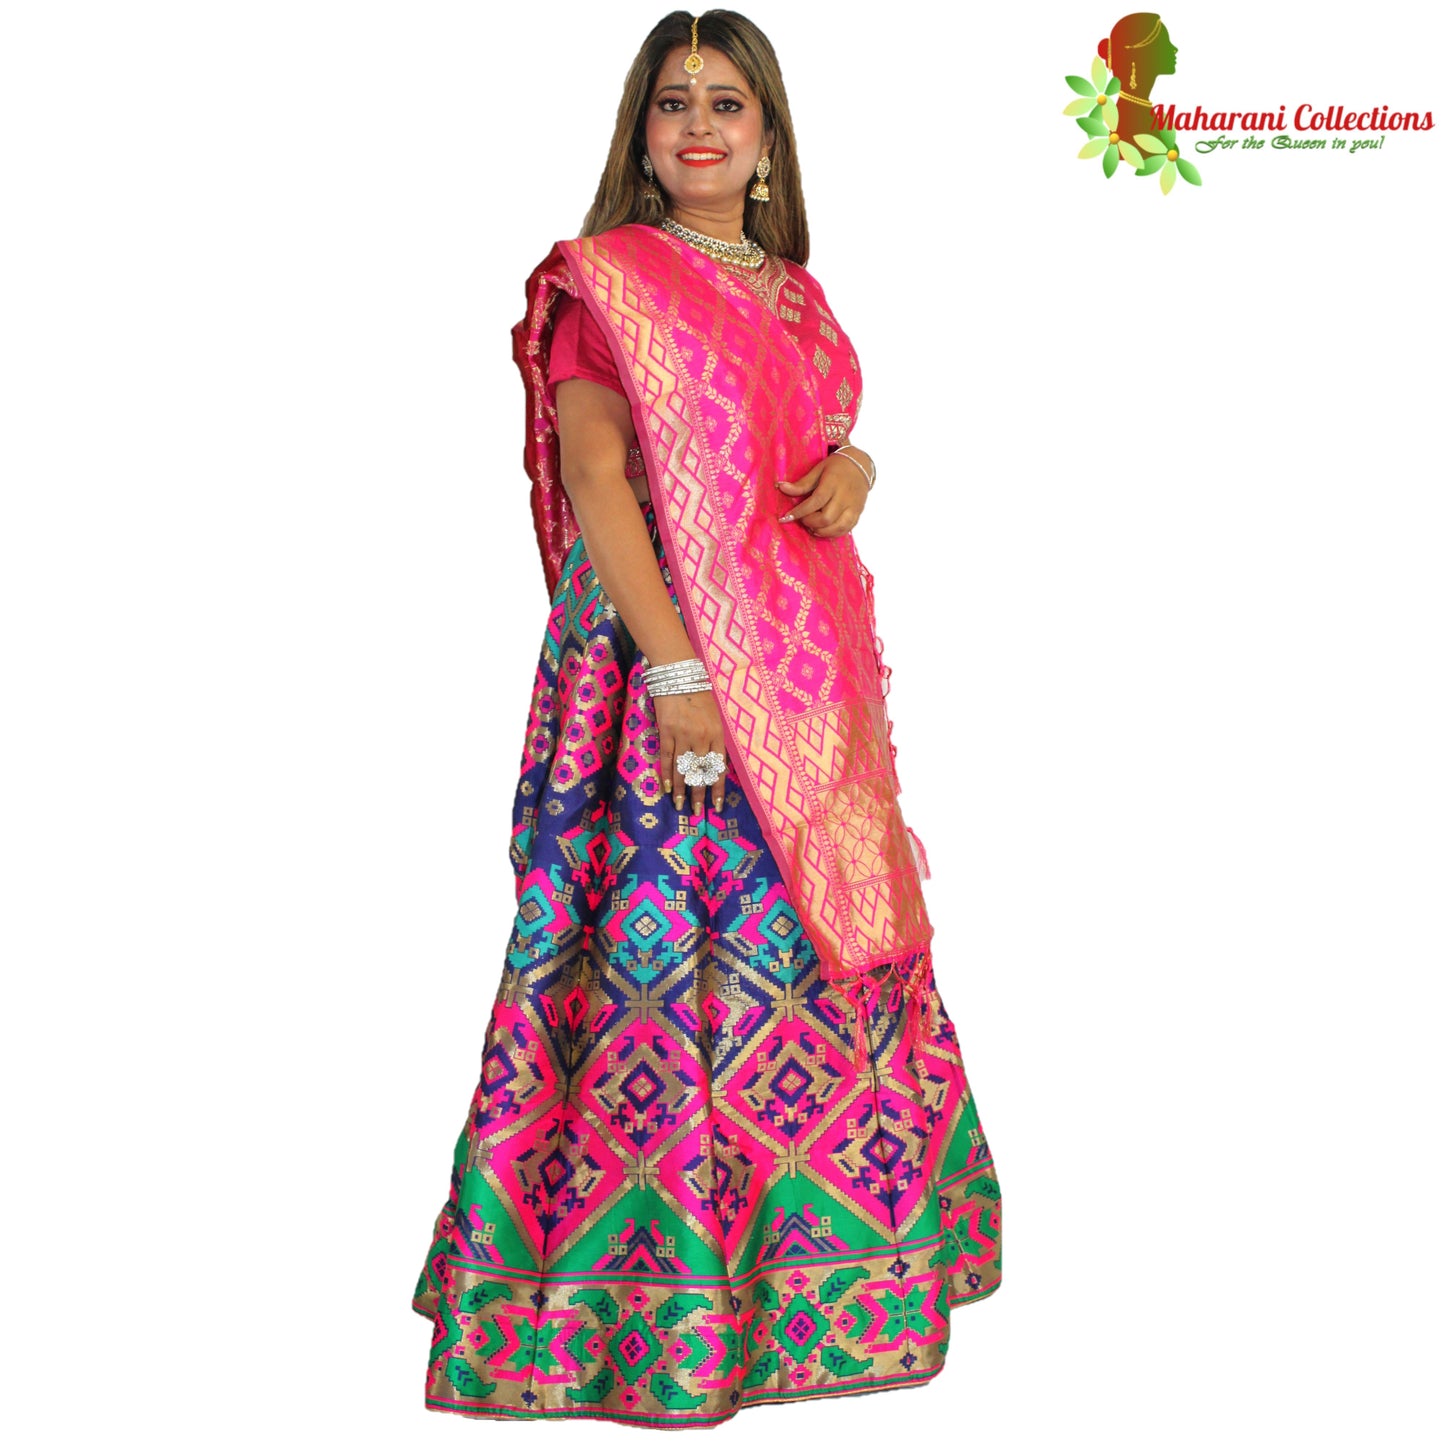 Maharani's Designer Pure Banarasi Silk Lehenga - Pink, Green and Blue (M/L)